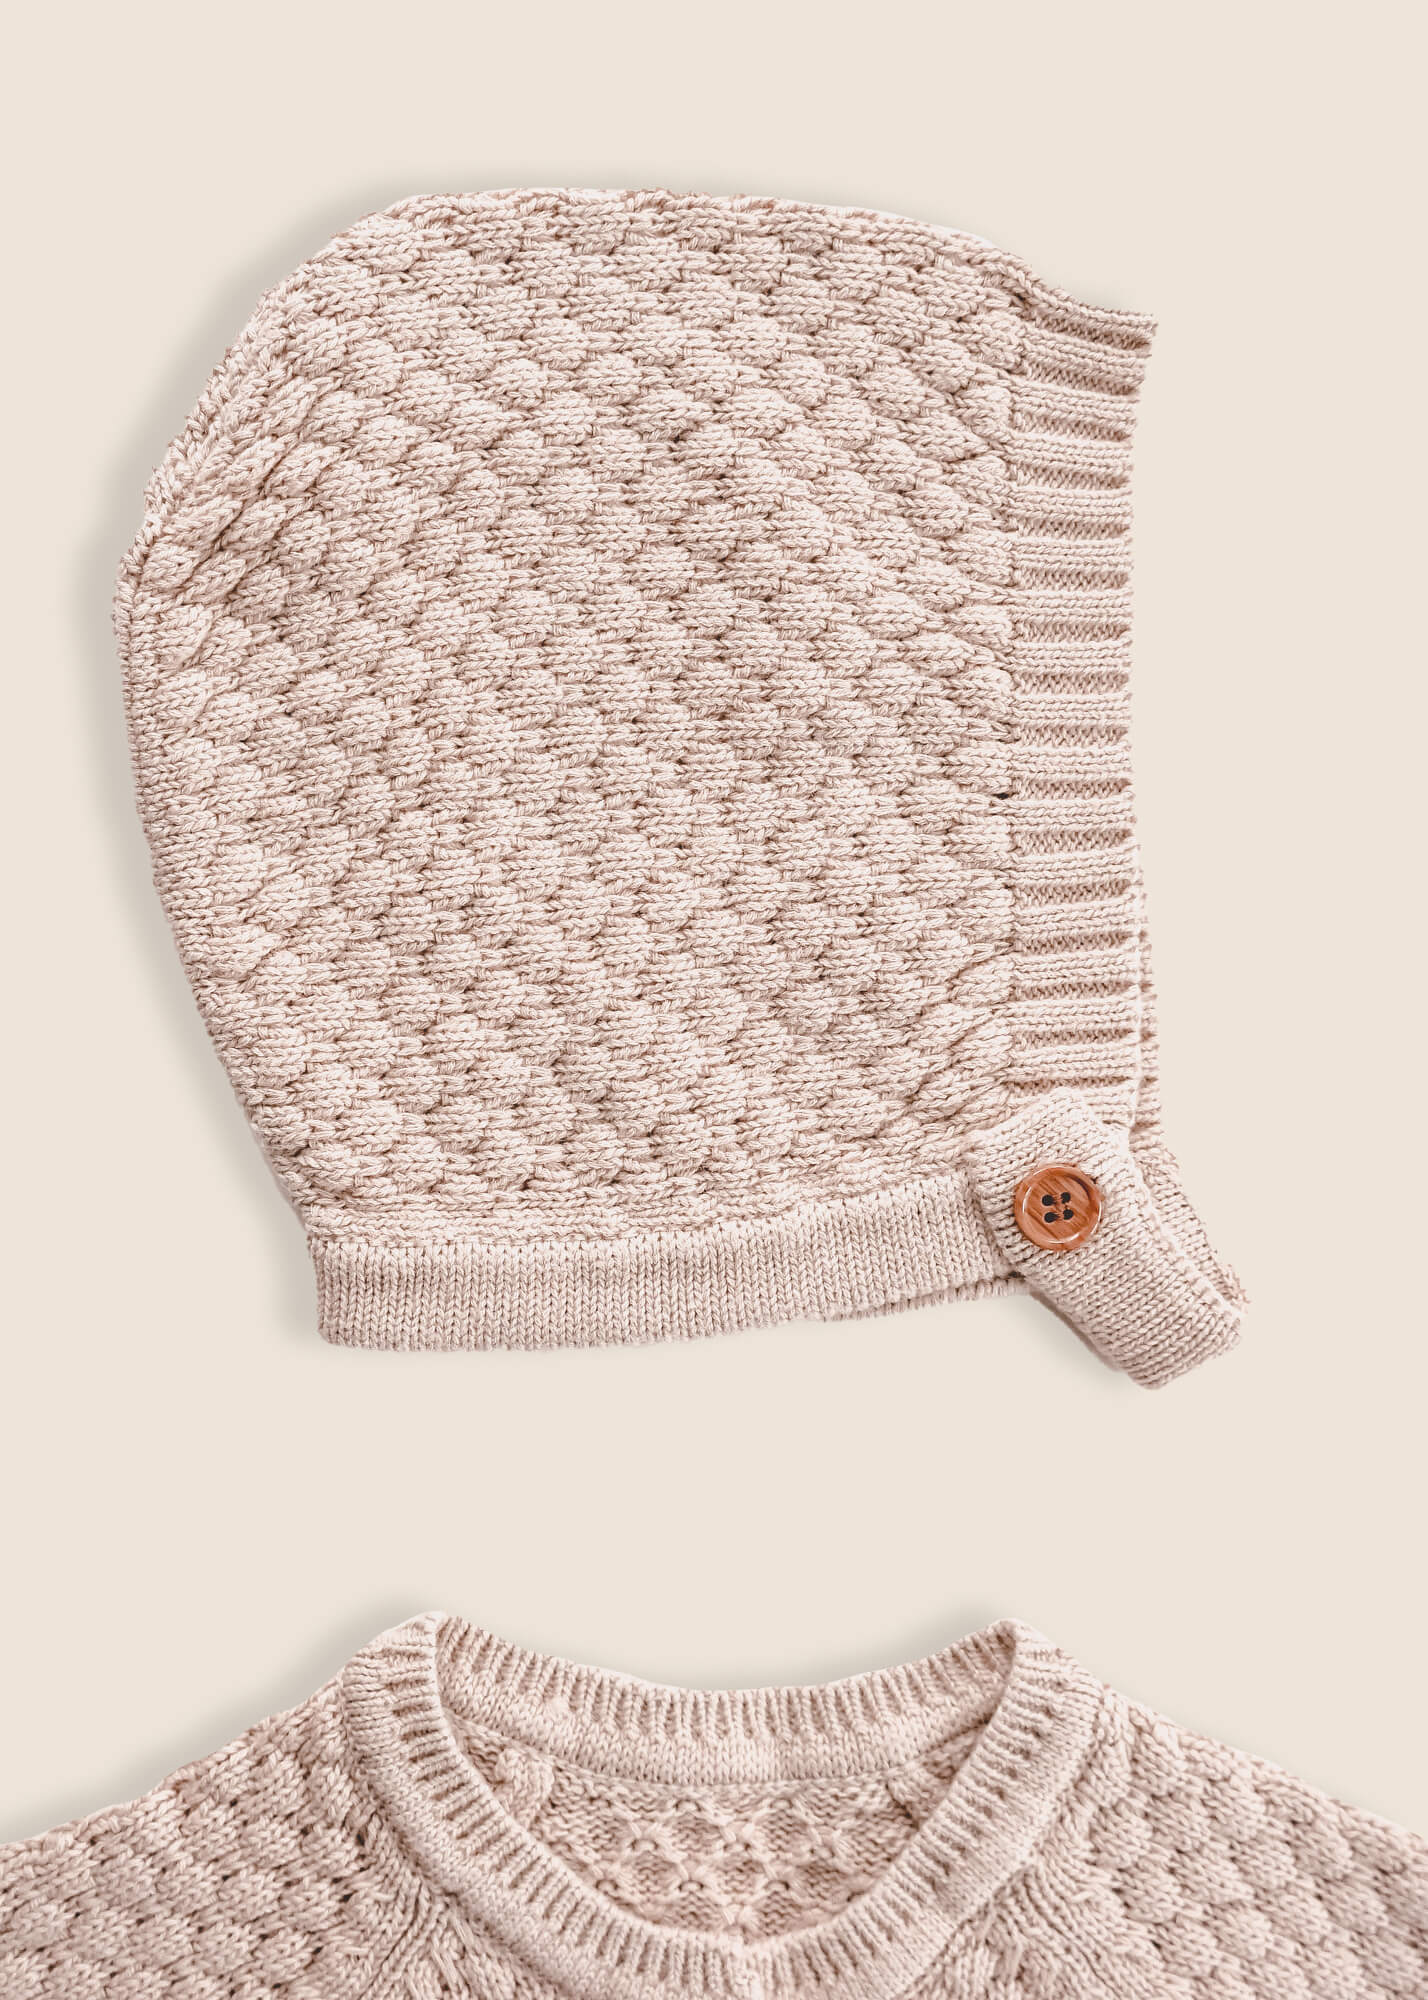 JUDE Knitted Button-Up Romper + Bonnet - Biscuit - Rocco & The Fox brown neutral baby toddler newborn knit romper and bonnet set matching beige neutral unisex gender neutral